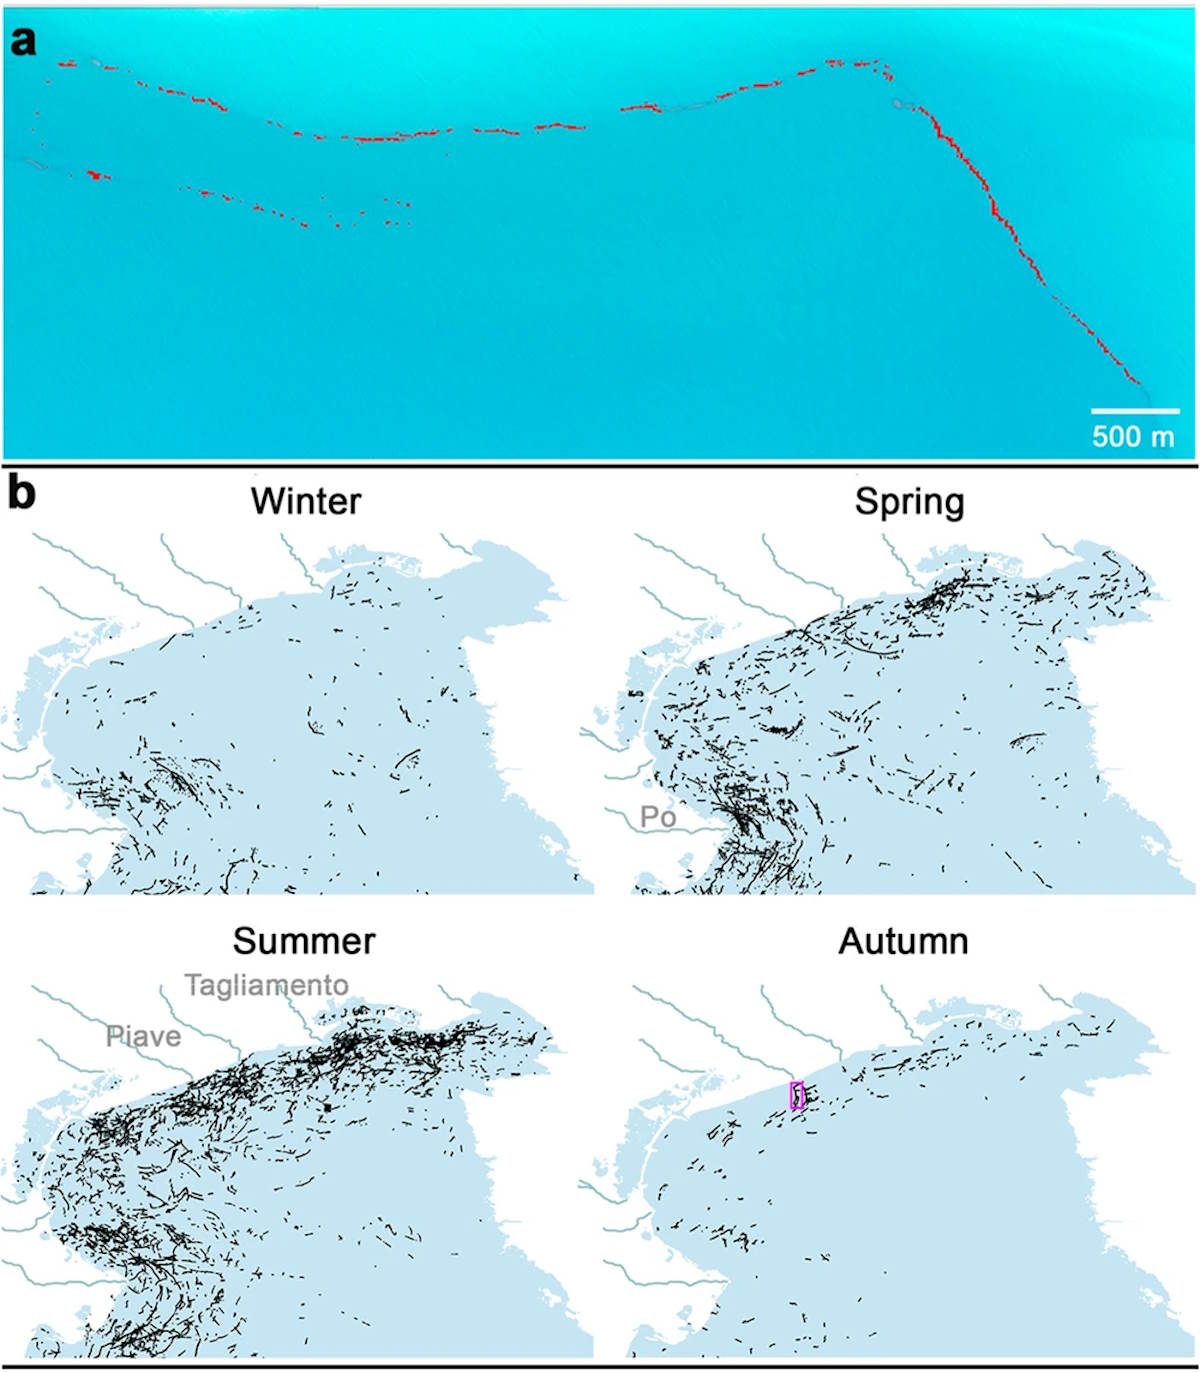 strisce rifiuti nel mediterraneo mappa satelliti